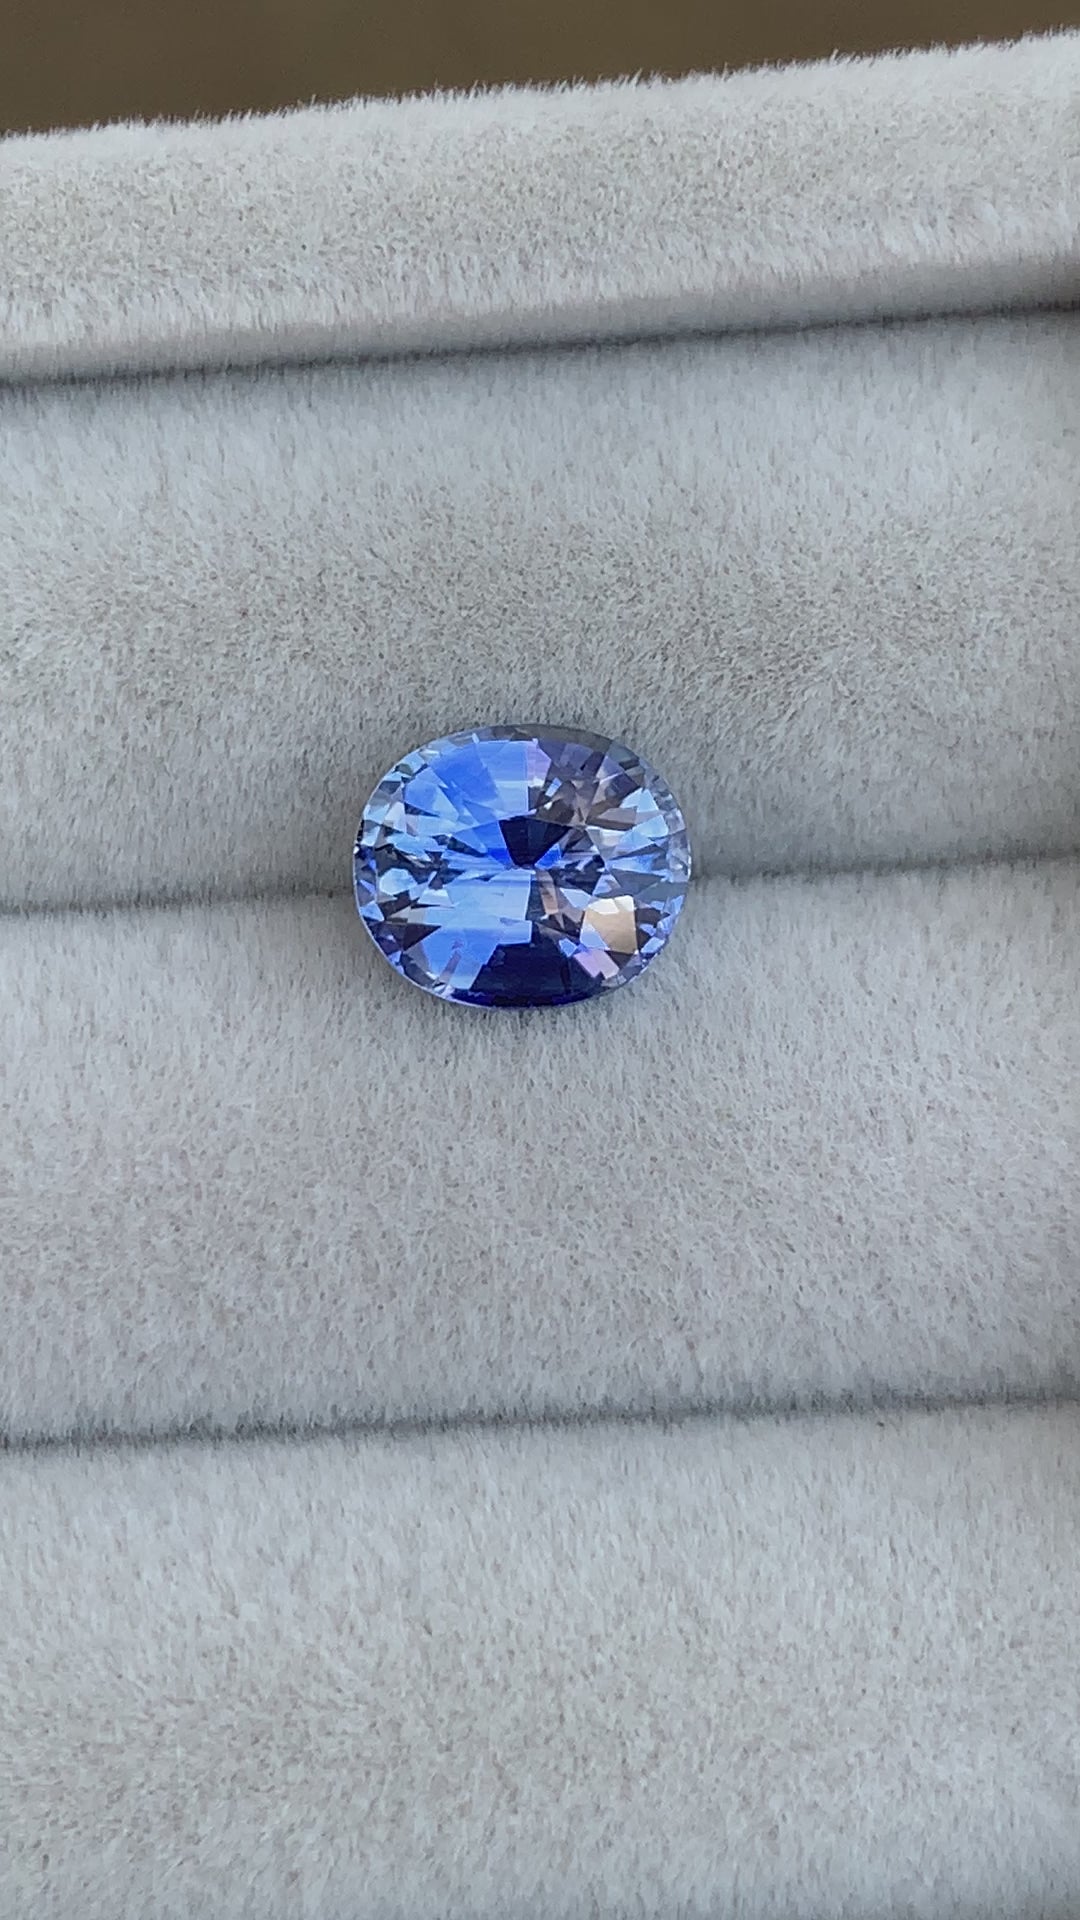 Seconde vidéo Saphir bleu taille ovale de 2,1ct